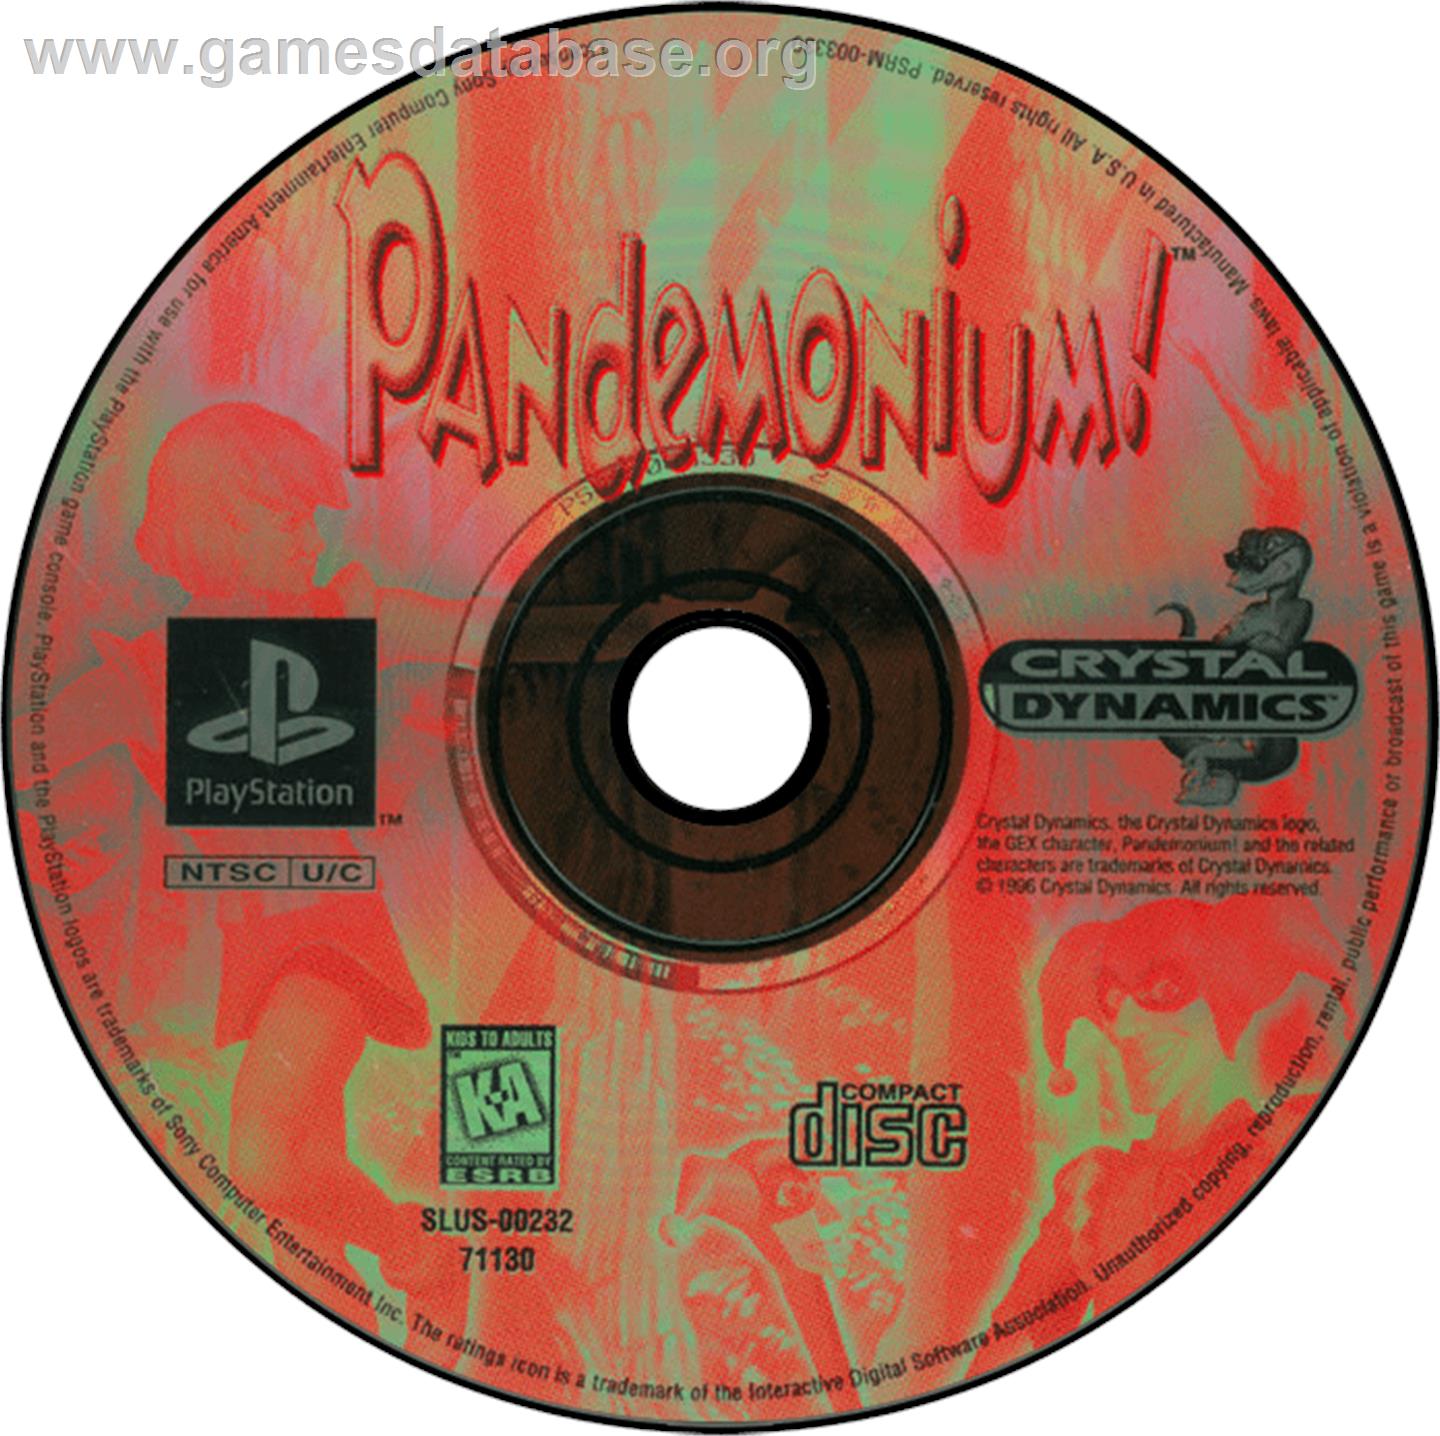 Pandemonium! - Sony Playstation - Artwork - Disc